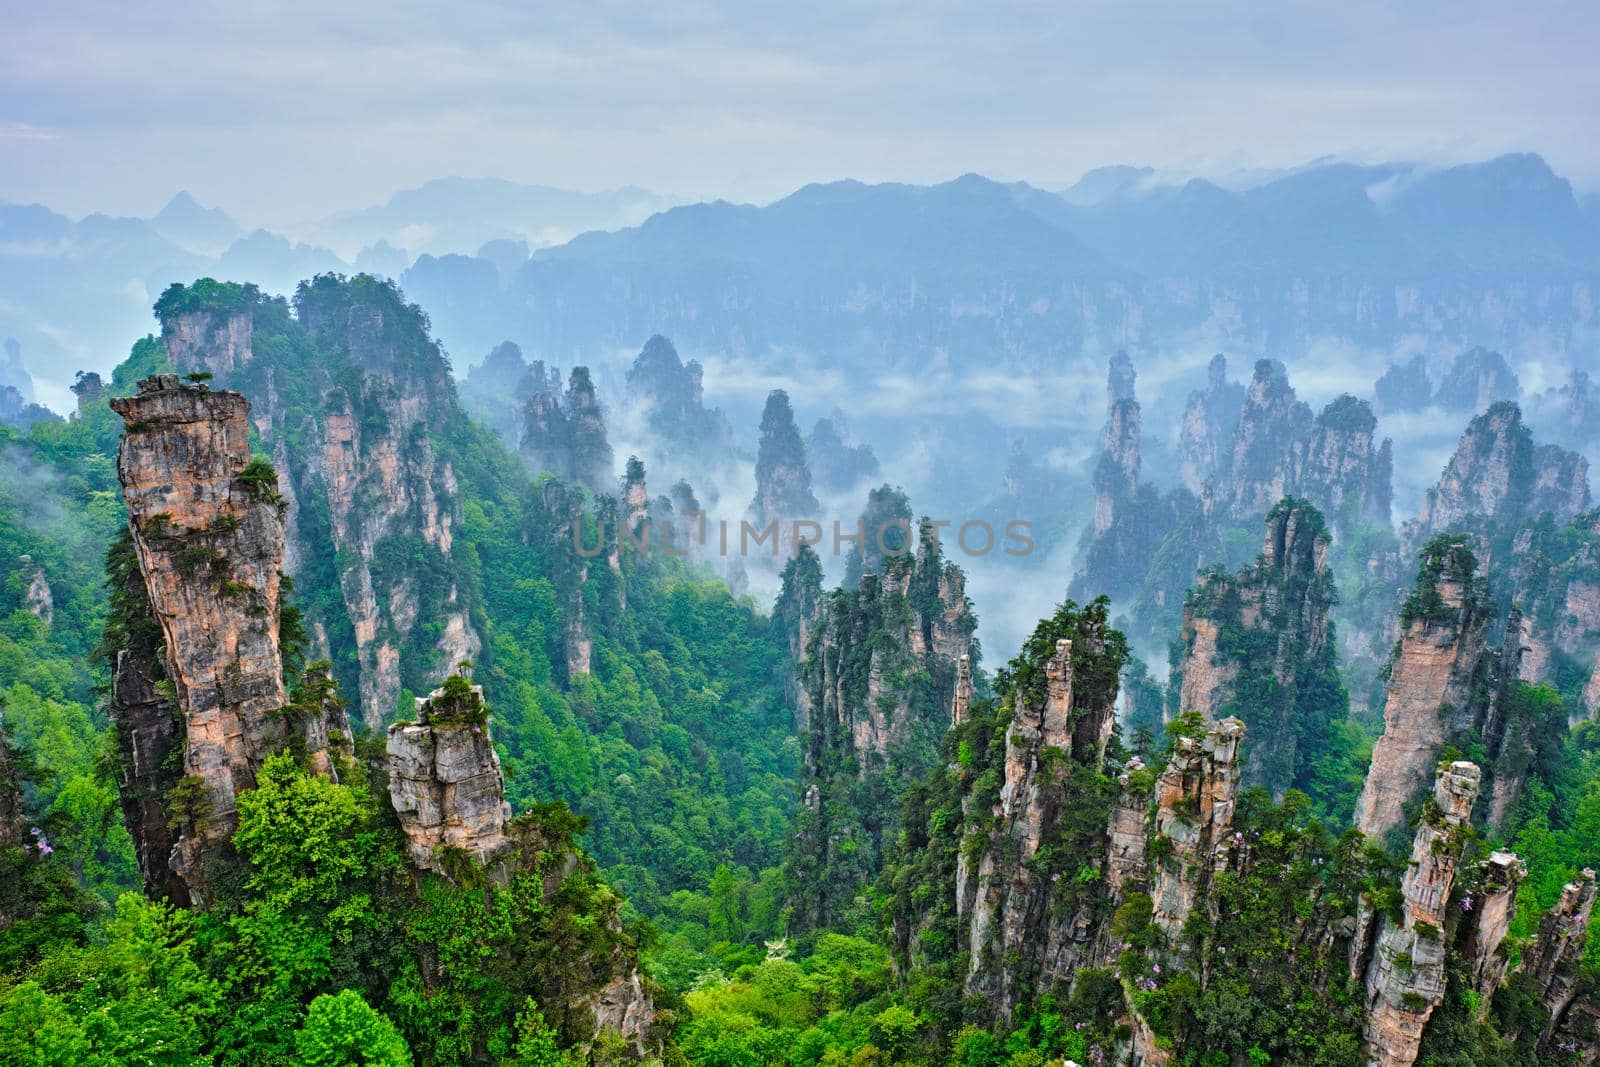 Famous tourist attraction of China - Zhangjiajie stone pillars cliff mountains in fog clouds at Wulingyuan, Hunan, China